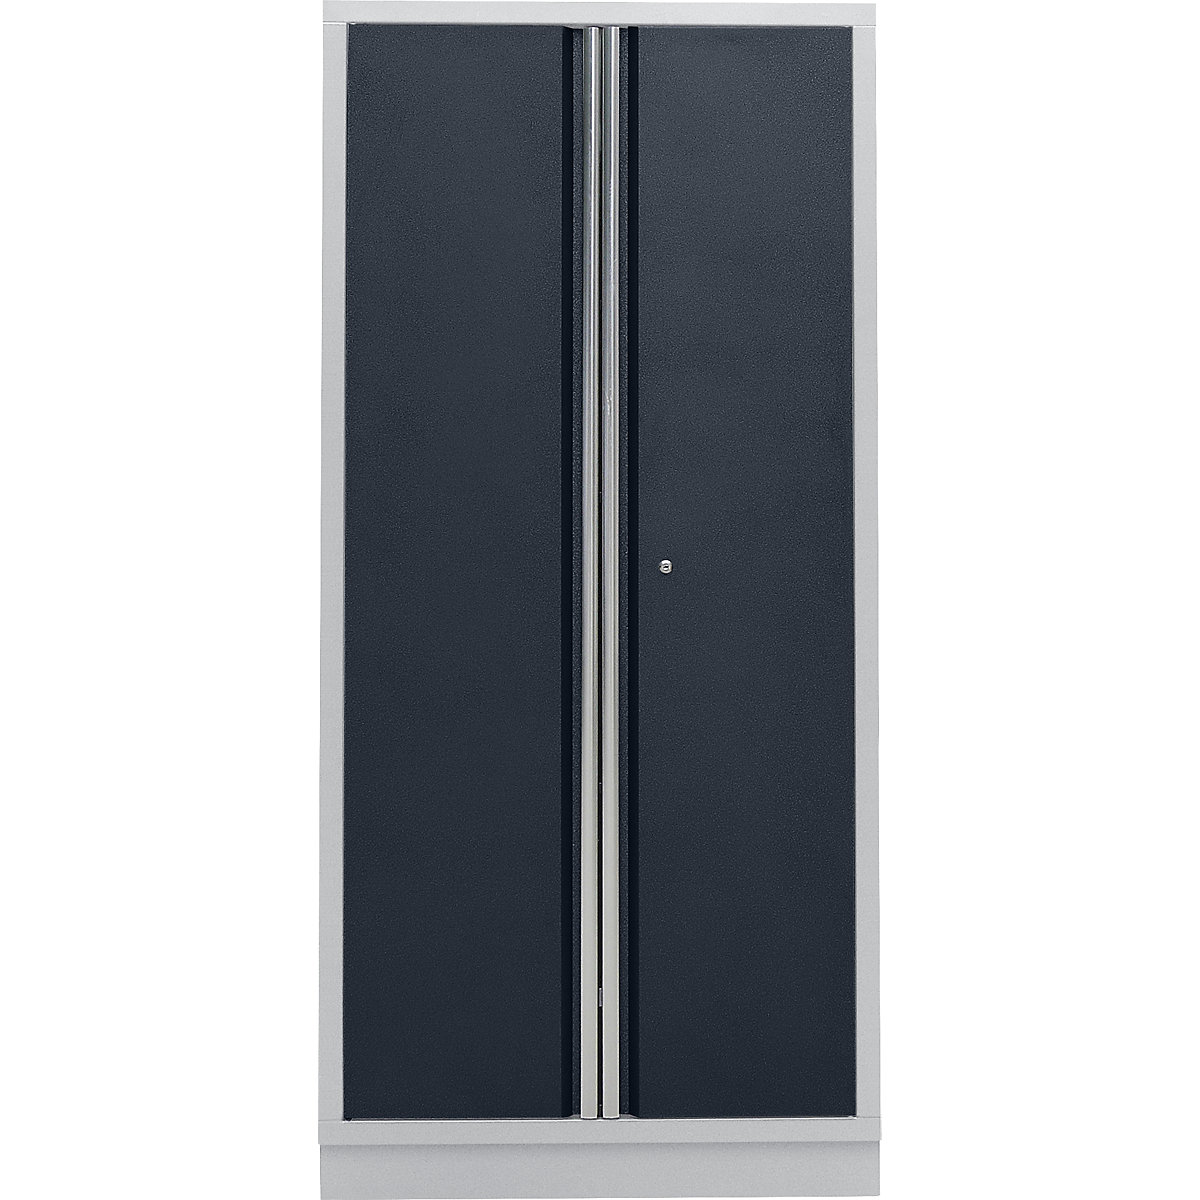 Full height cupboard with hinged door